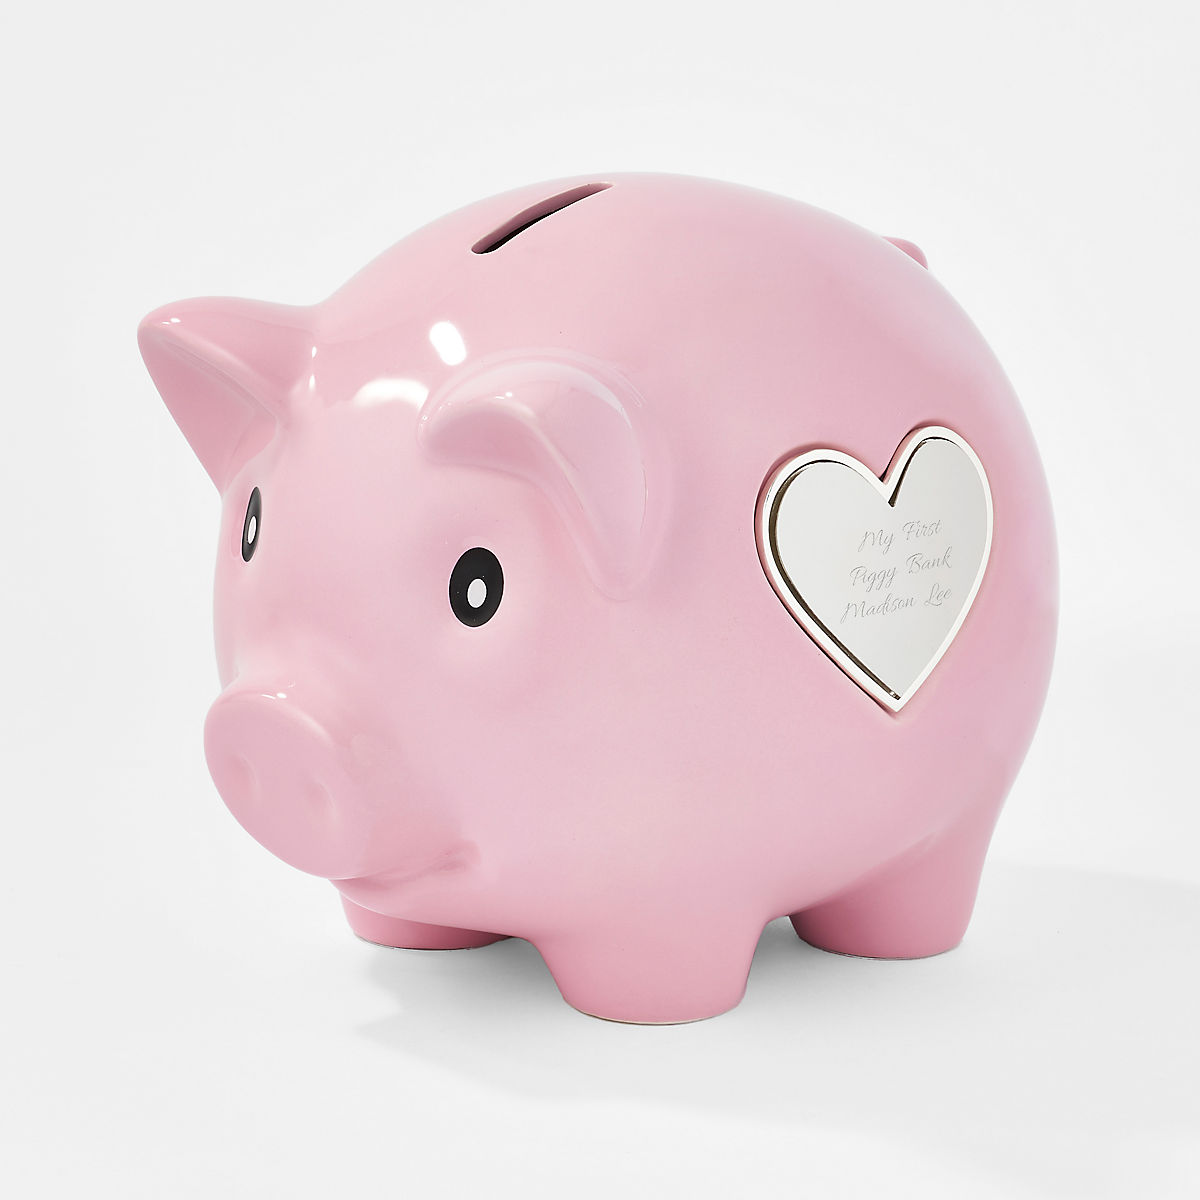 Personalised Ring Bearer Wedding Money Box Classics unique gift idea savings piggy Thank you 